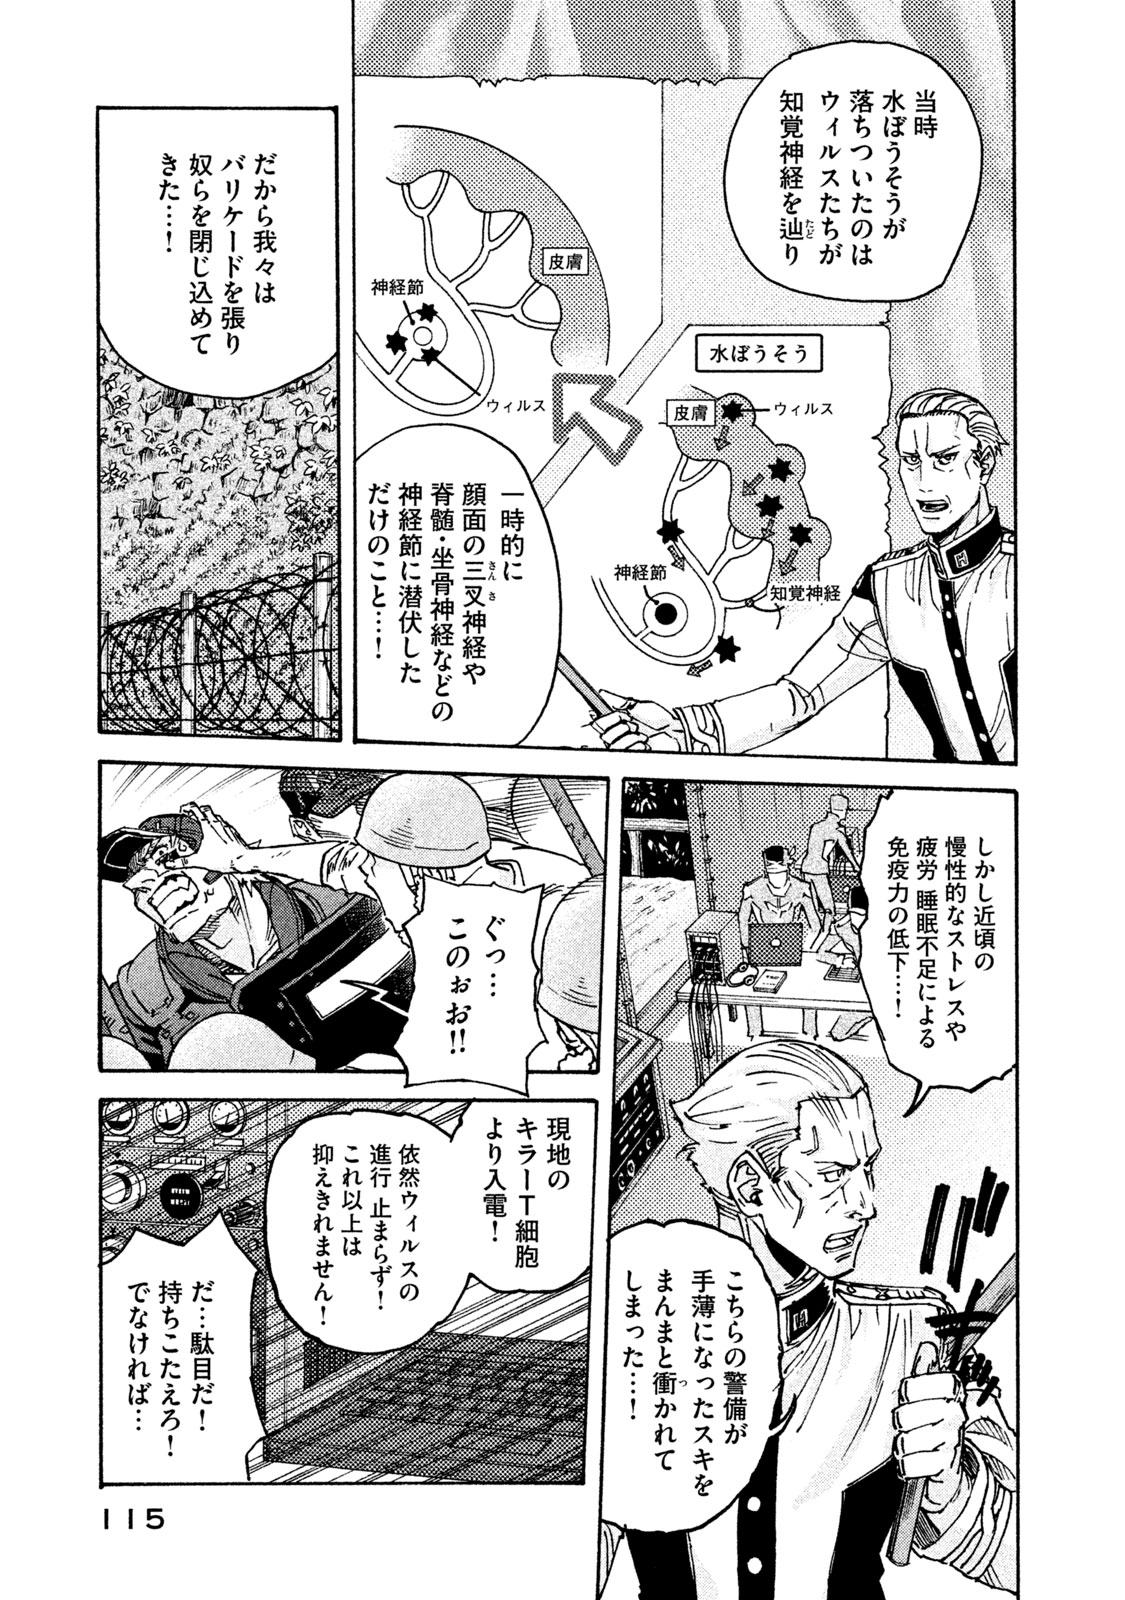 Hataraku Saibou BLACK - Chapter 23 - Page 9